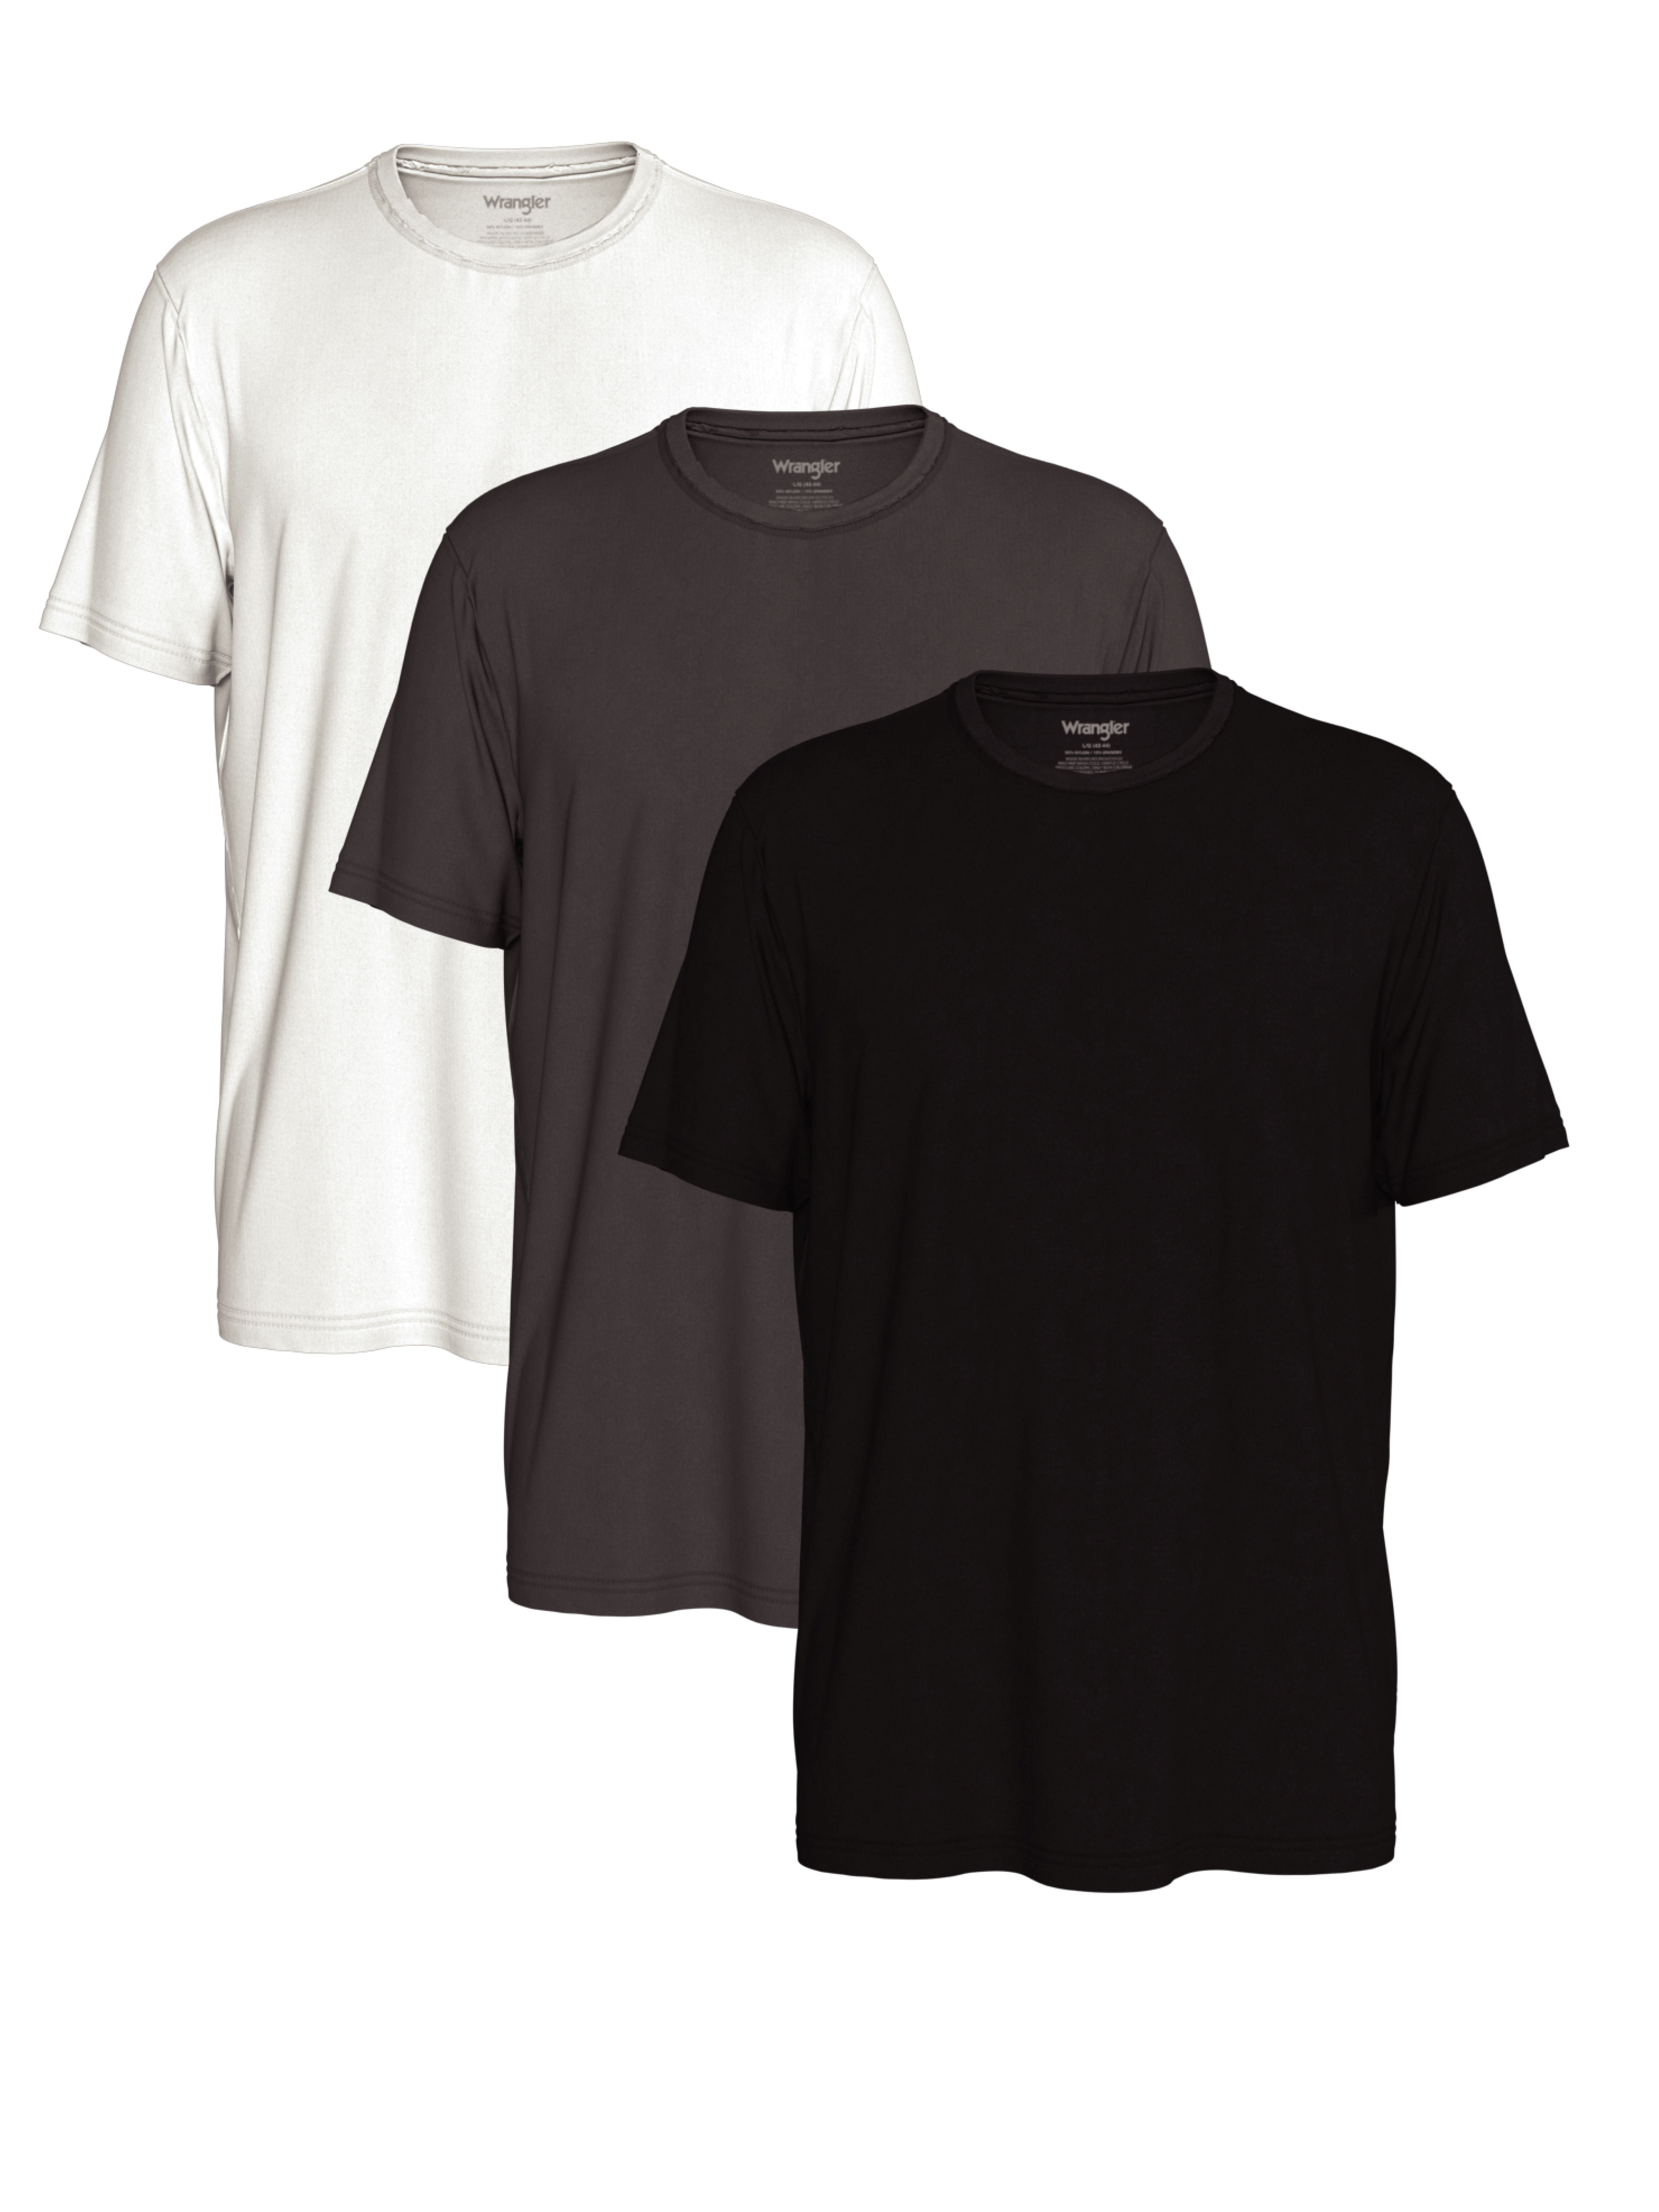 Wrangler Workwear Cooling T-Shirt - 3 Pack